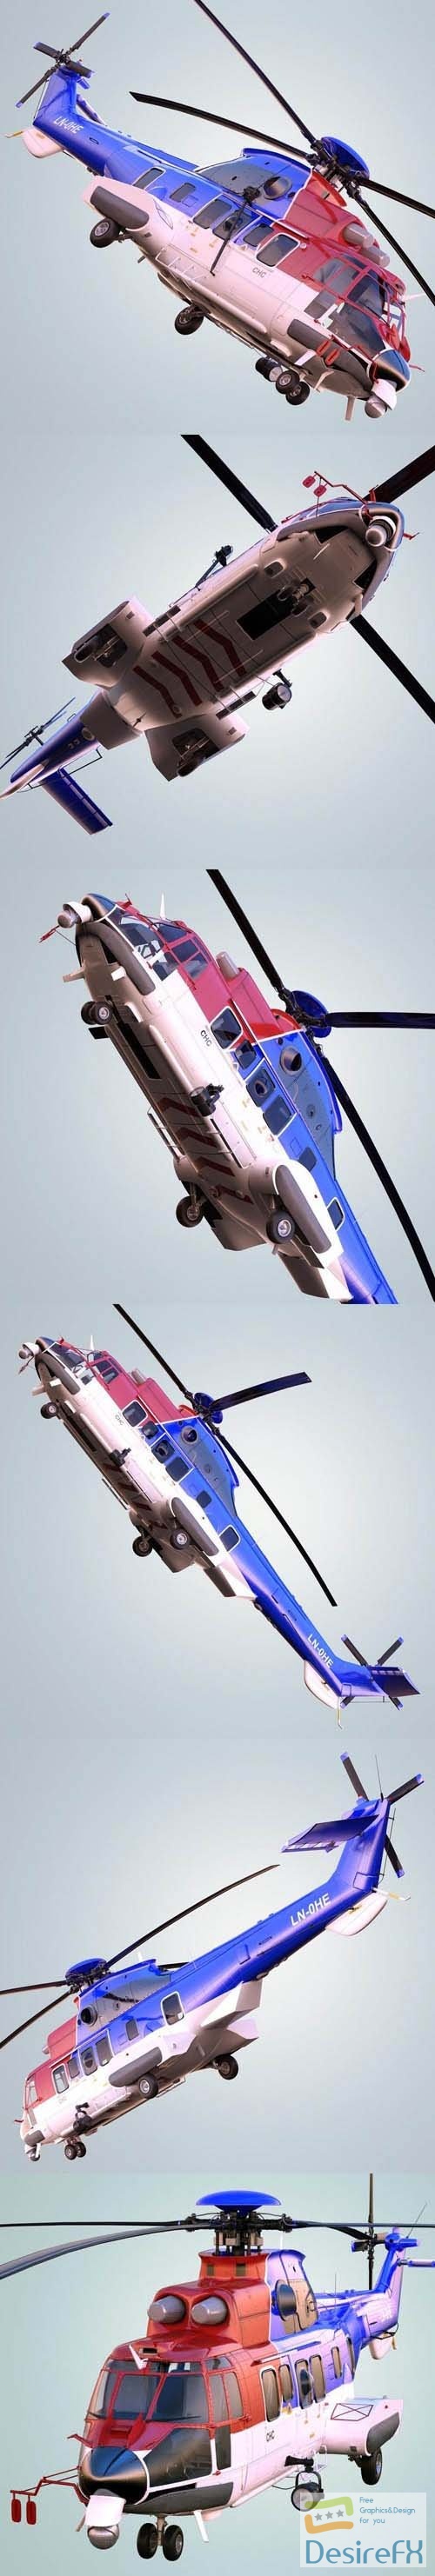 Eurocopter AS332L2 Super Puma 2